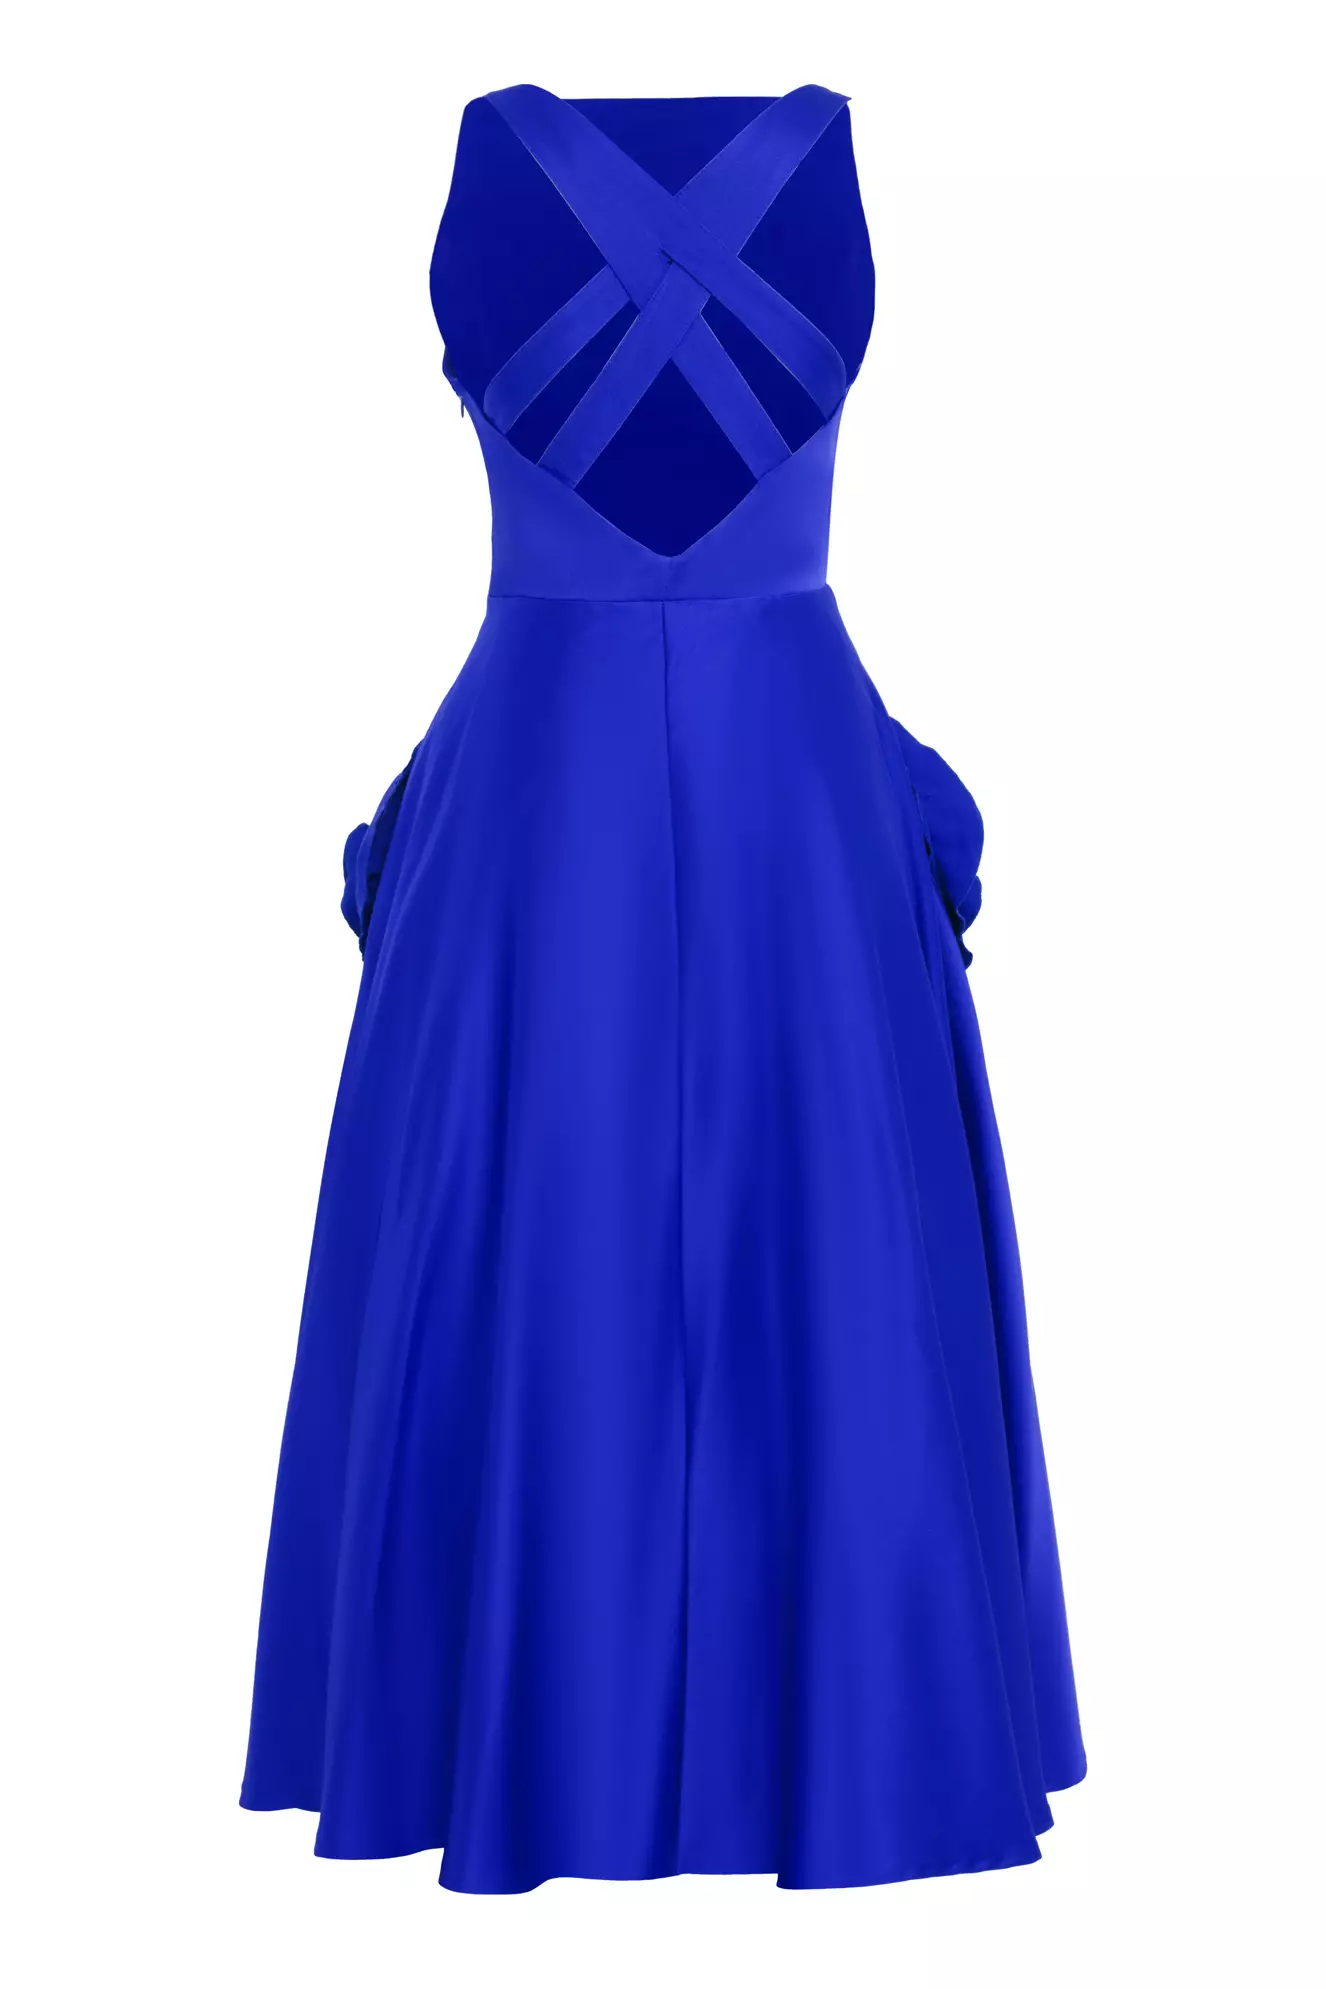 Blue satin sleeveless long dress